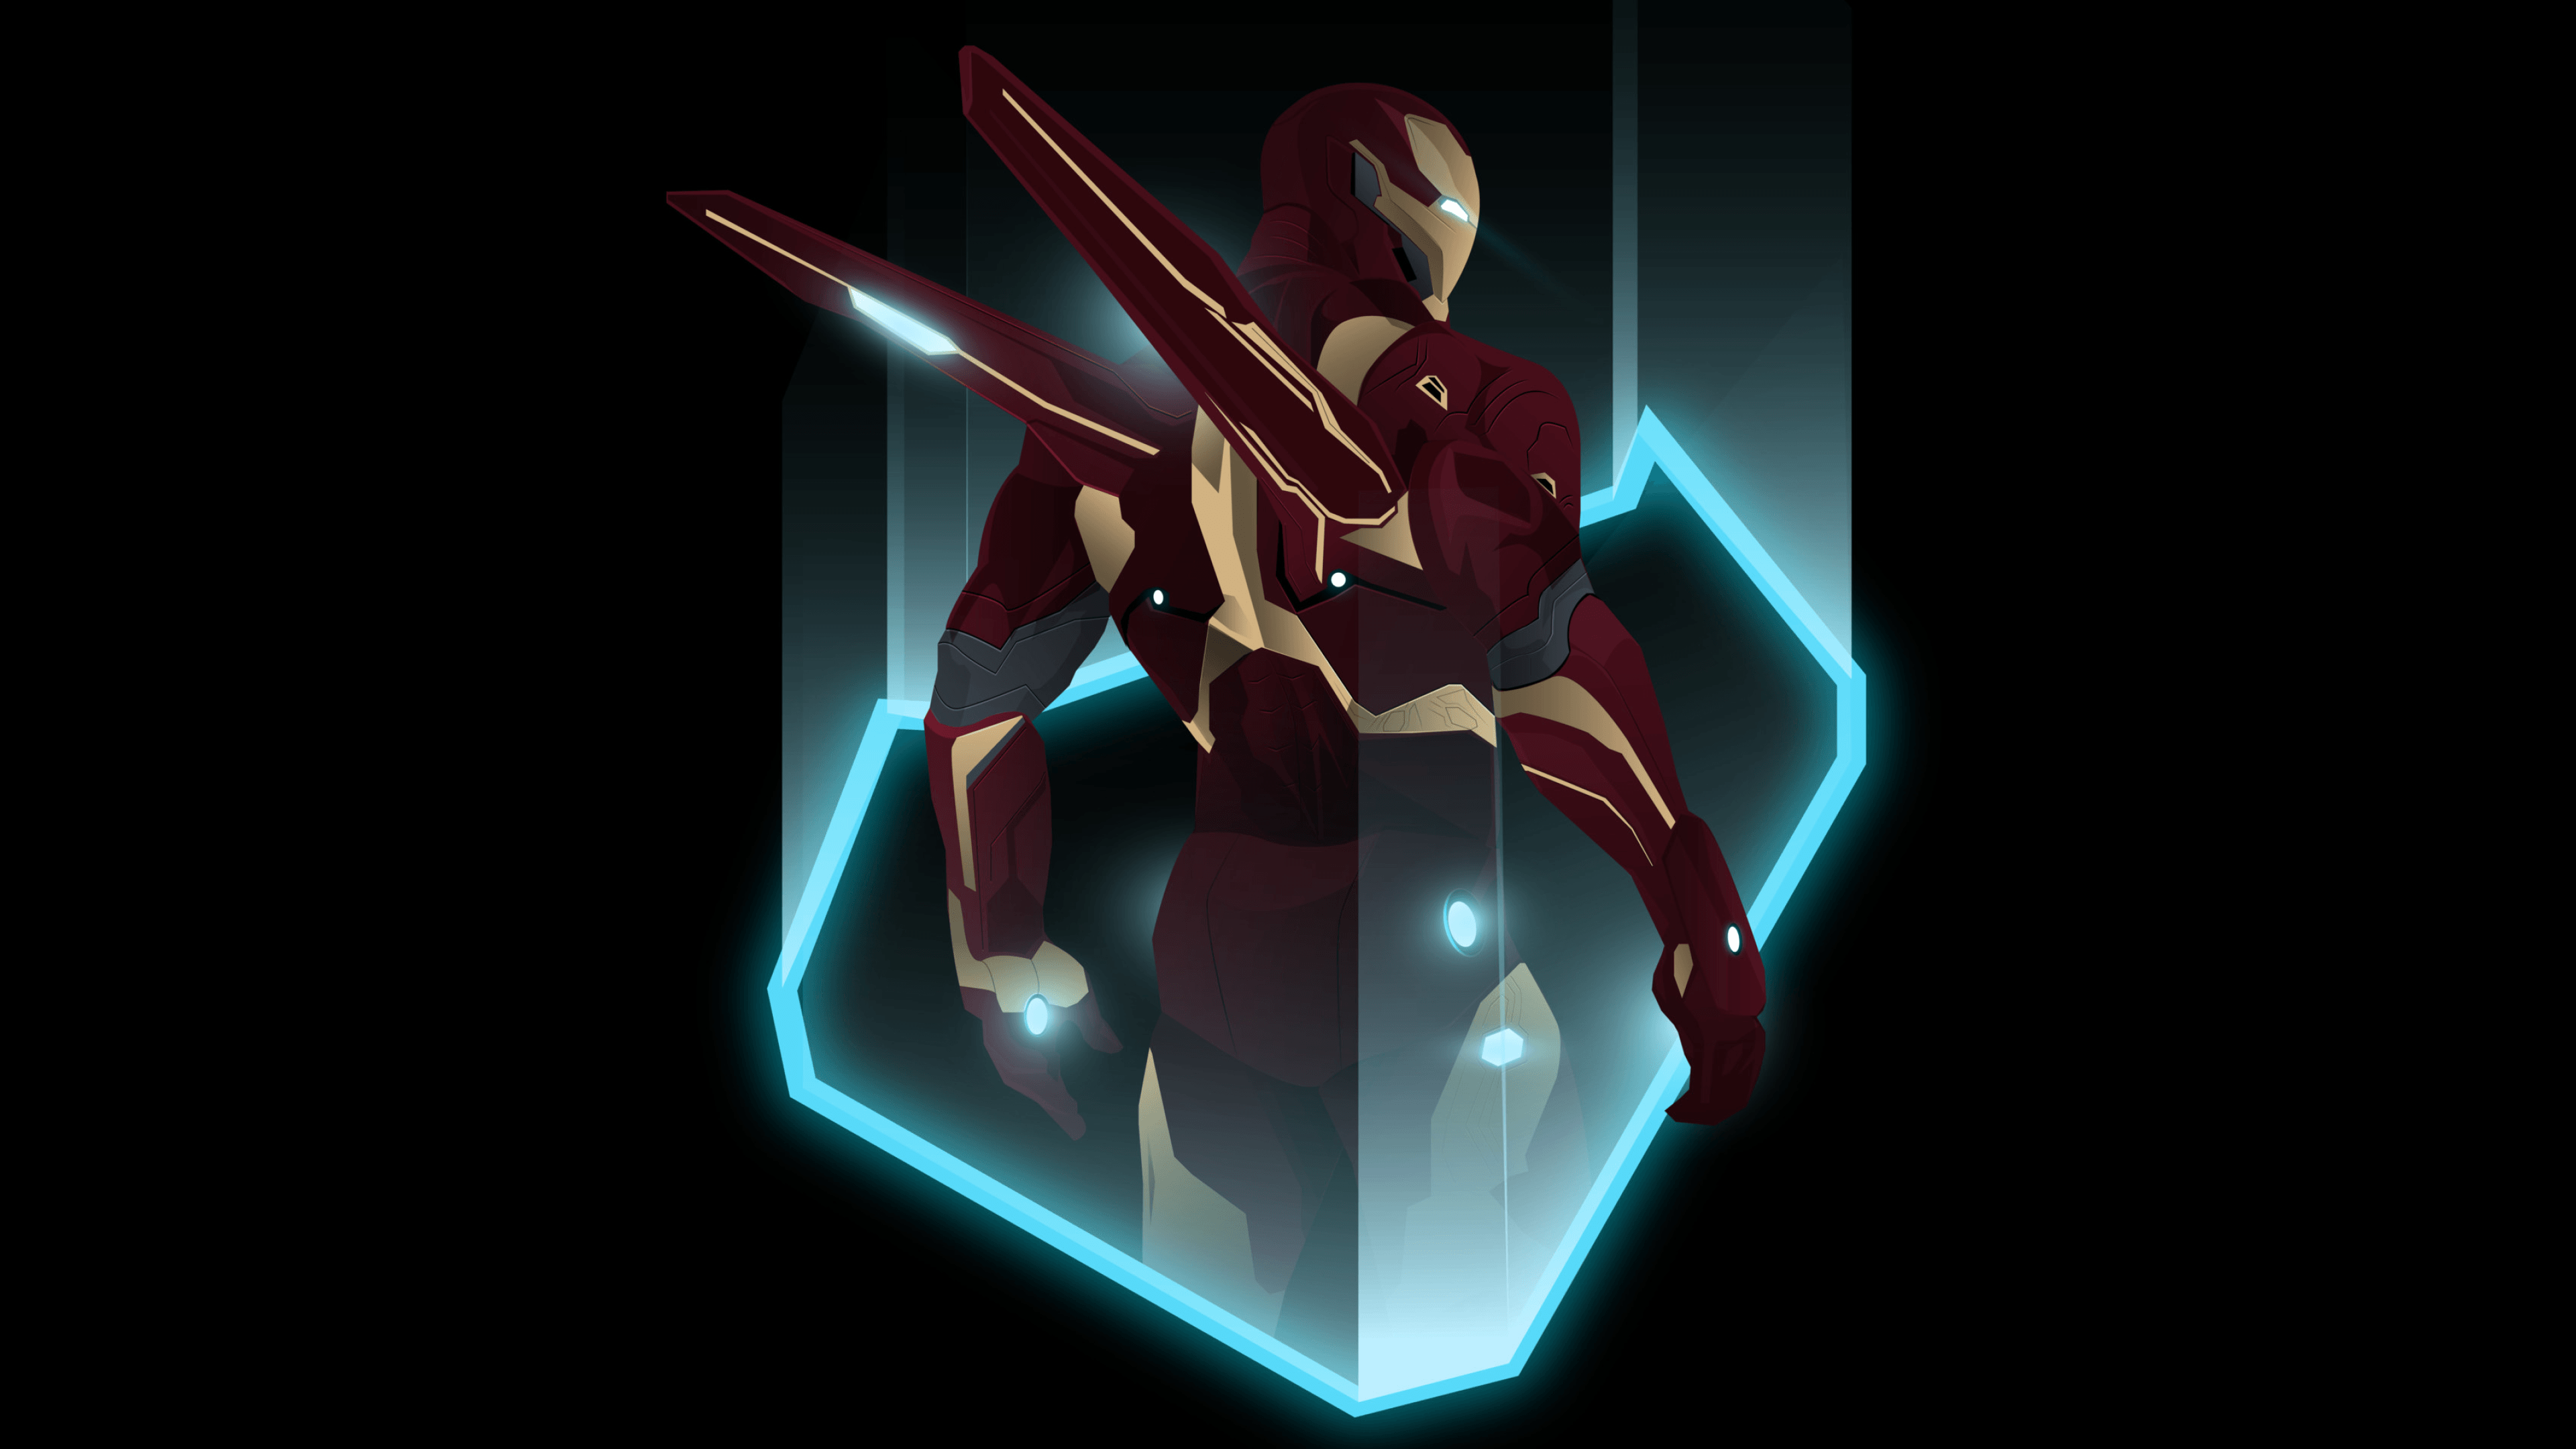 Iron Man Minimalist Avengers Endgame 2019 4k 3840×2160